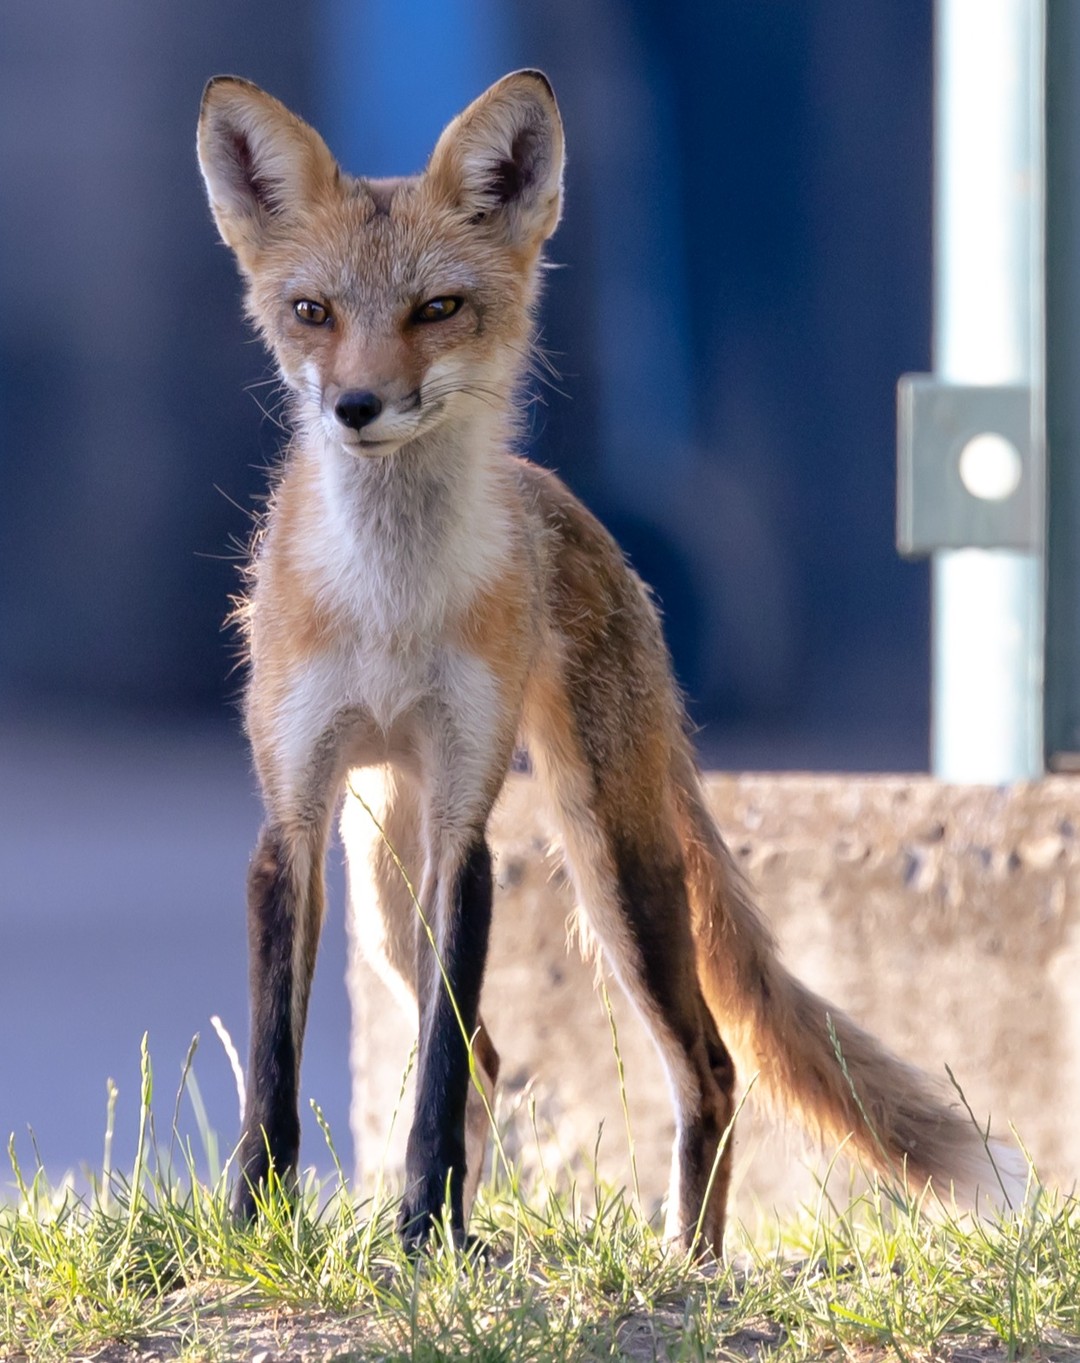 City fox on the lookout. #fox #wildlifephotography #naturephotography #foxkit #raw_wildlife